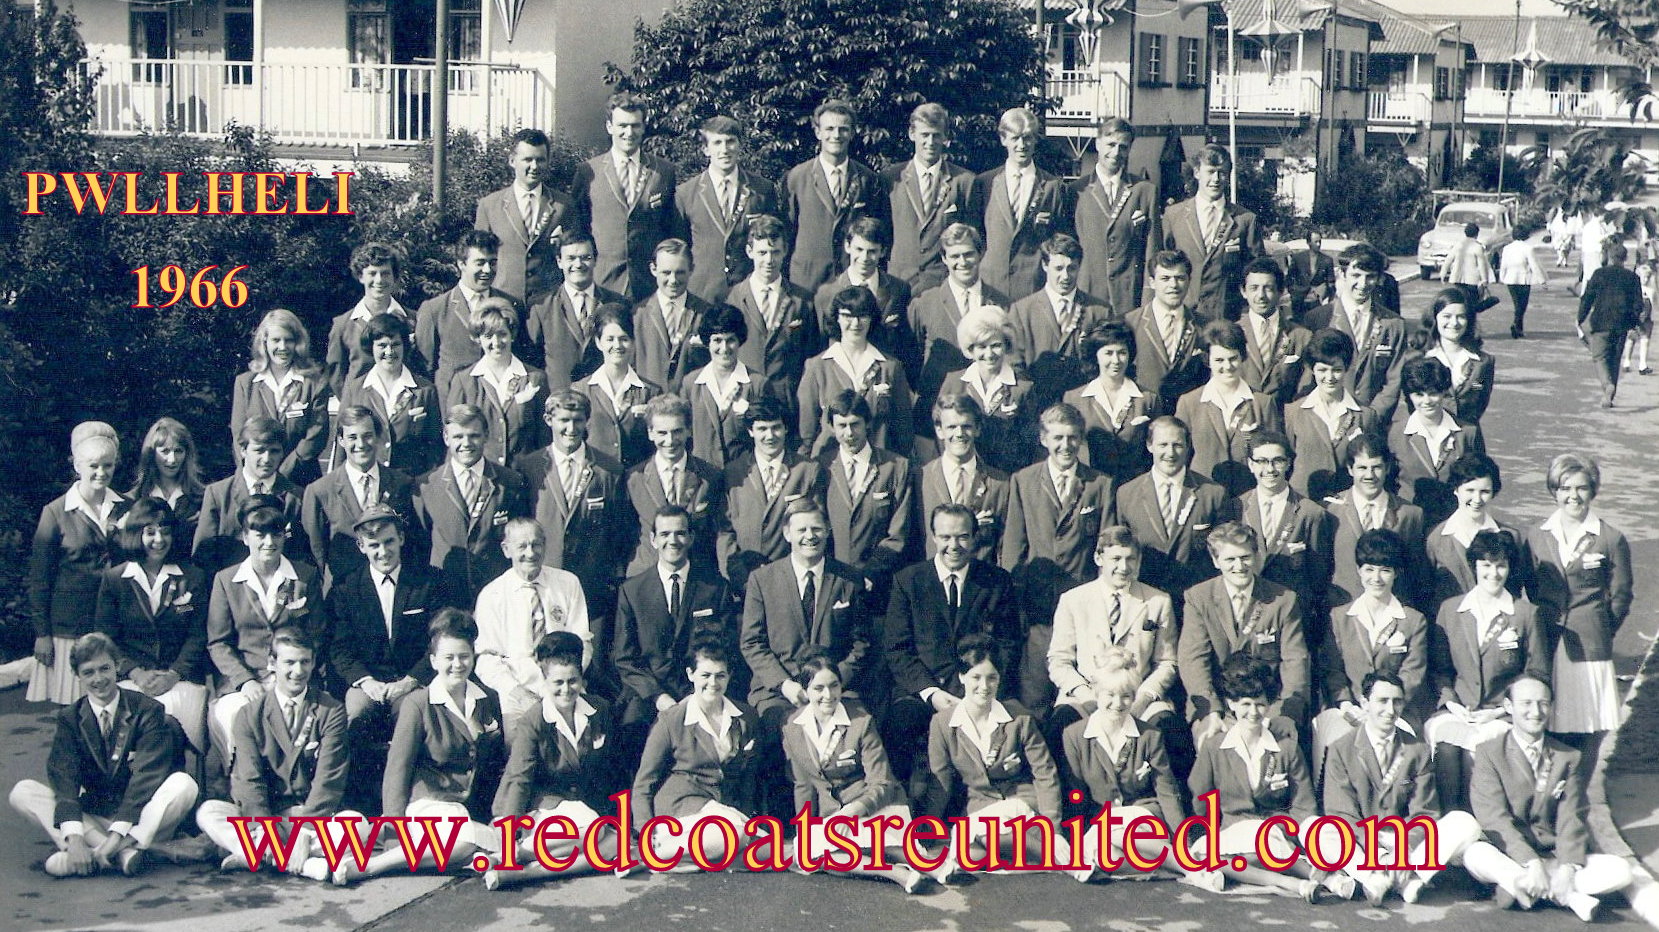 BUTLINS PWLLHELI REDCOATS 1966 at Redcoats Reunited